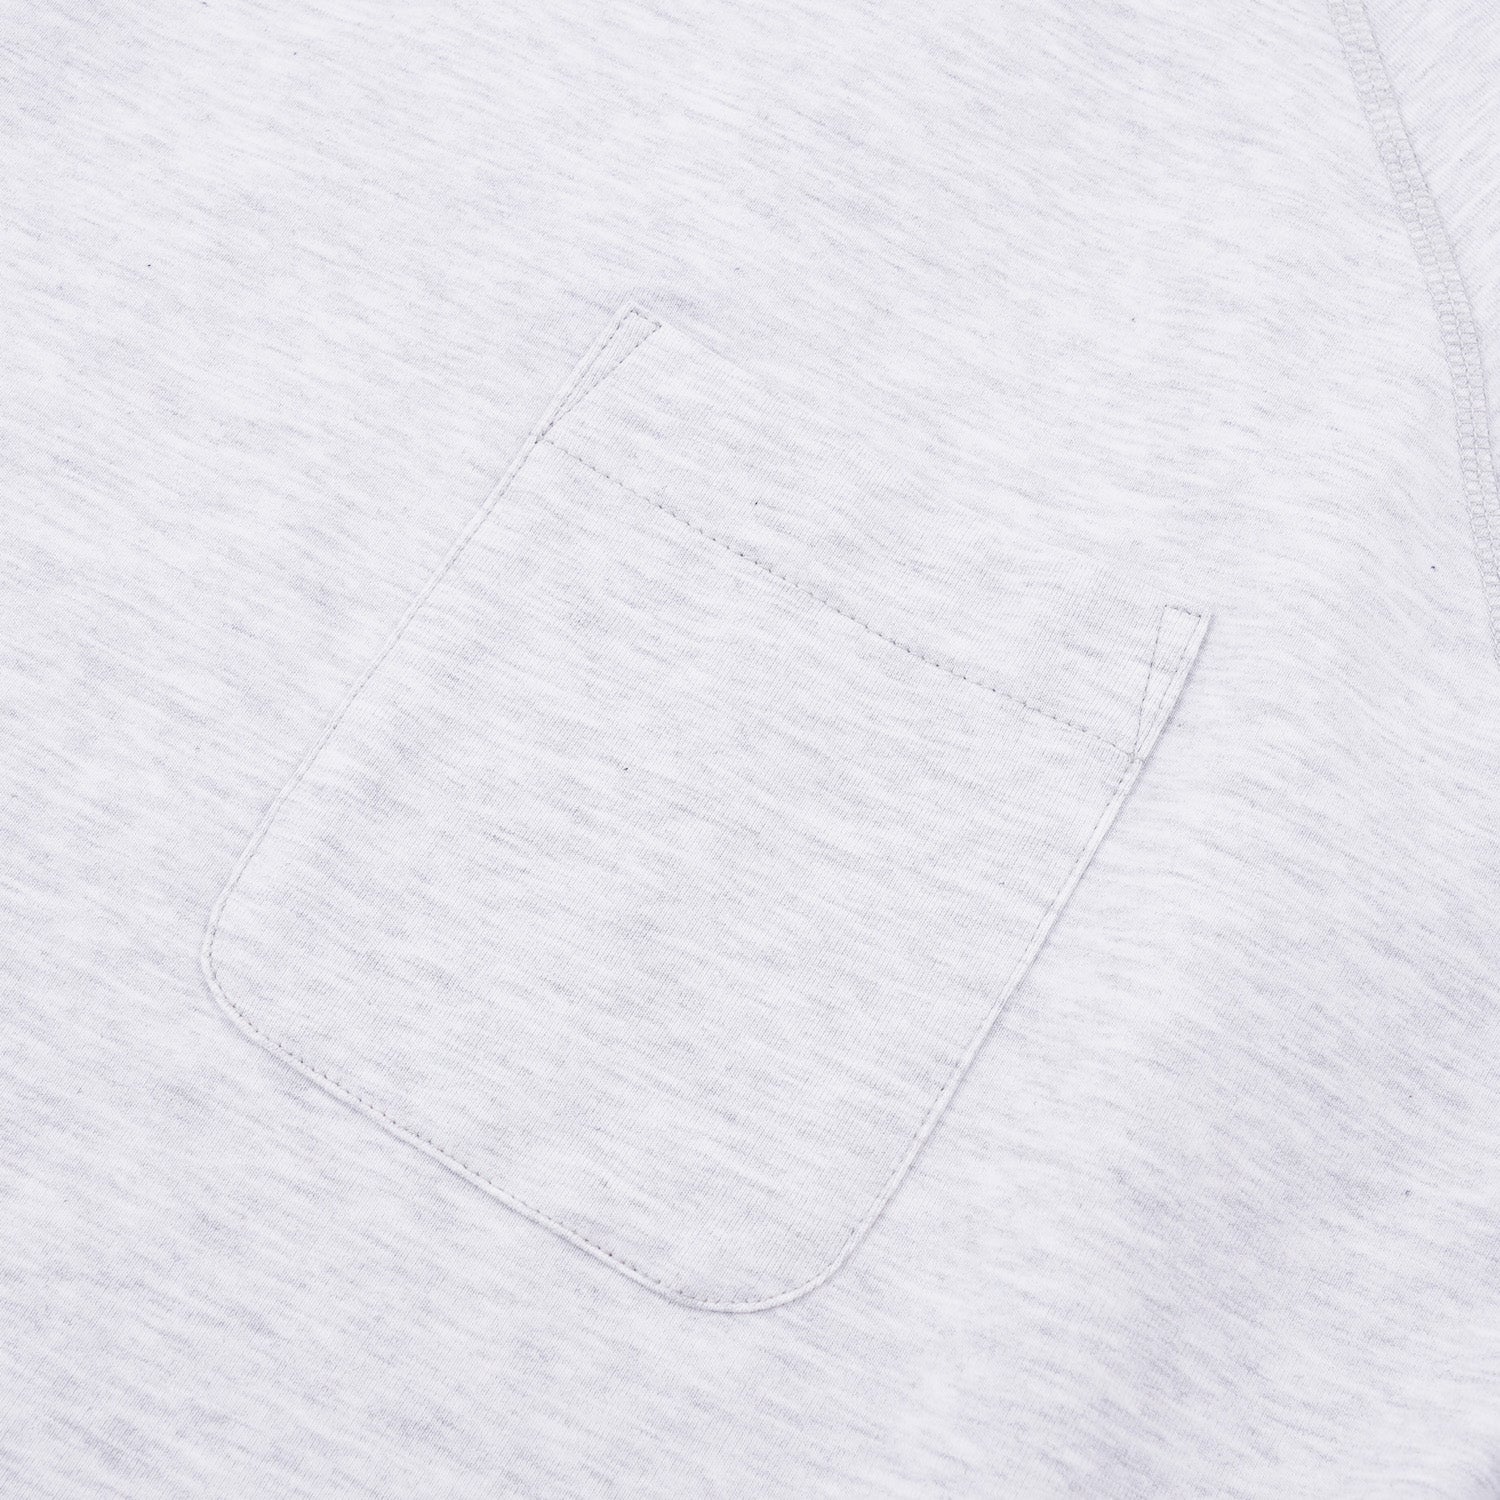 Peserico Fleece Cotton Crewneck Sweatshirt - Top Shelf Apparel